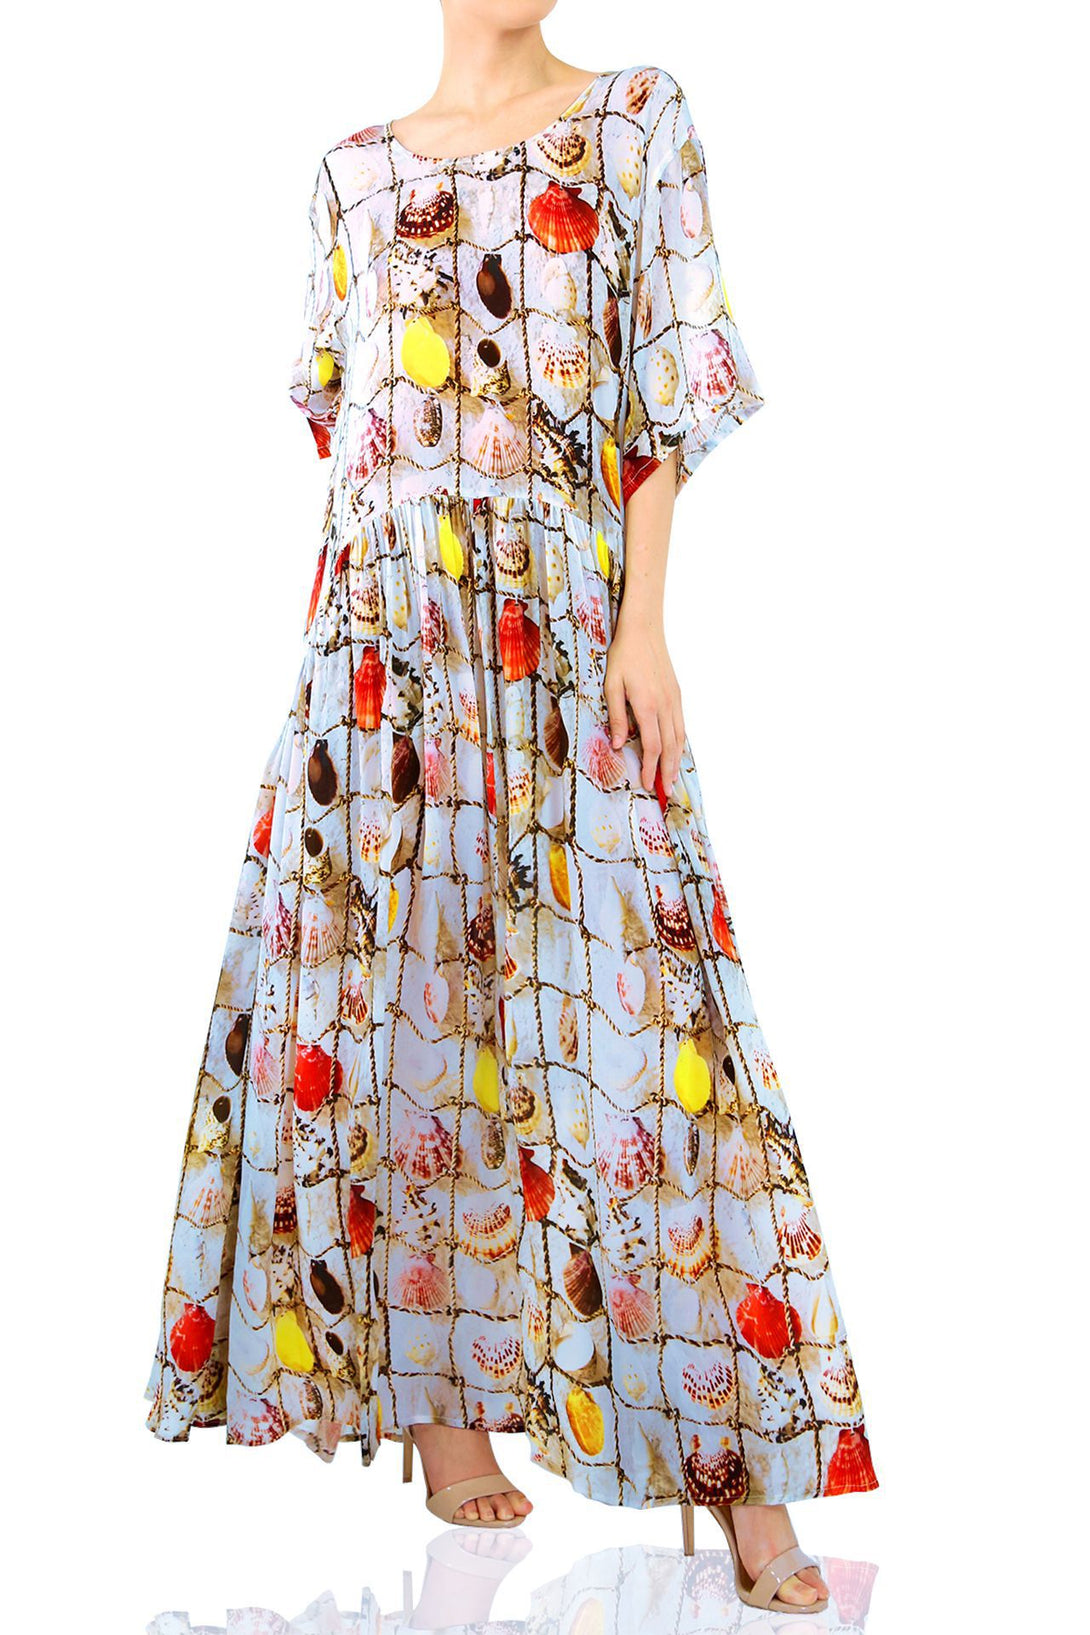 "floor length dress" "summer maxi dresses for women" "Shahida Parides" "beach maxi dress"